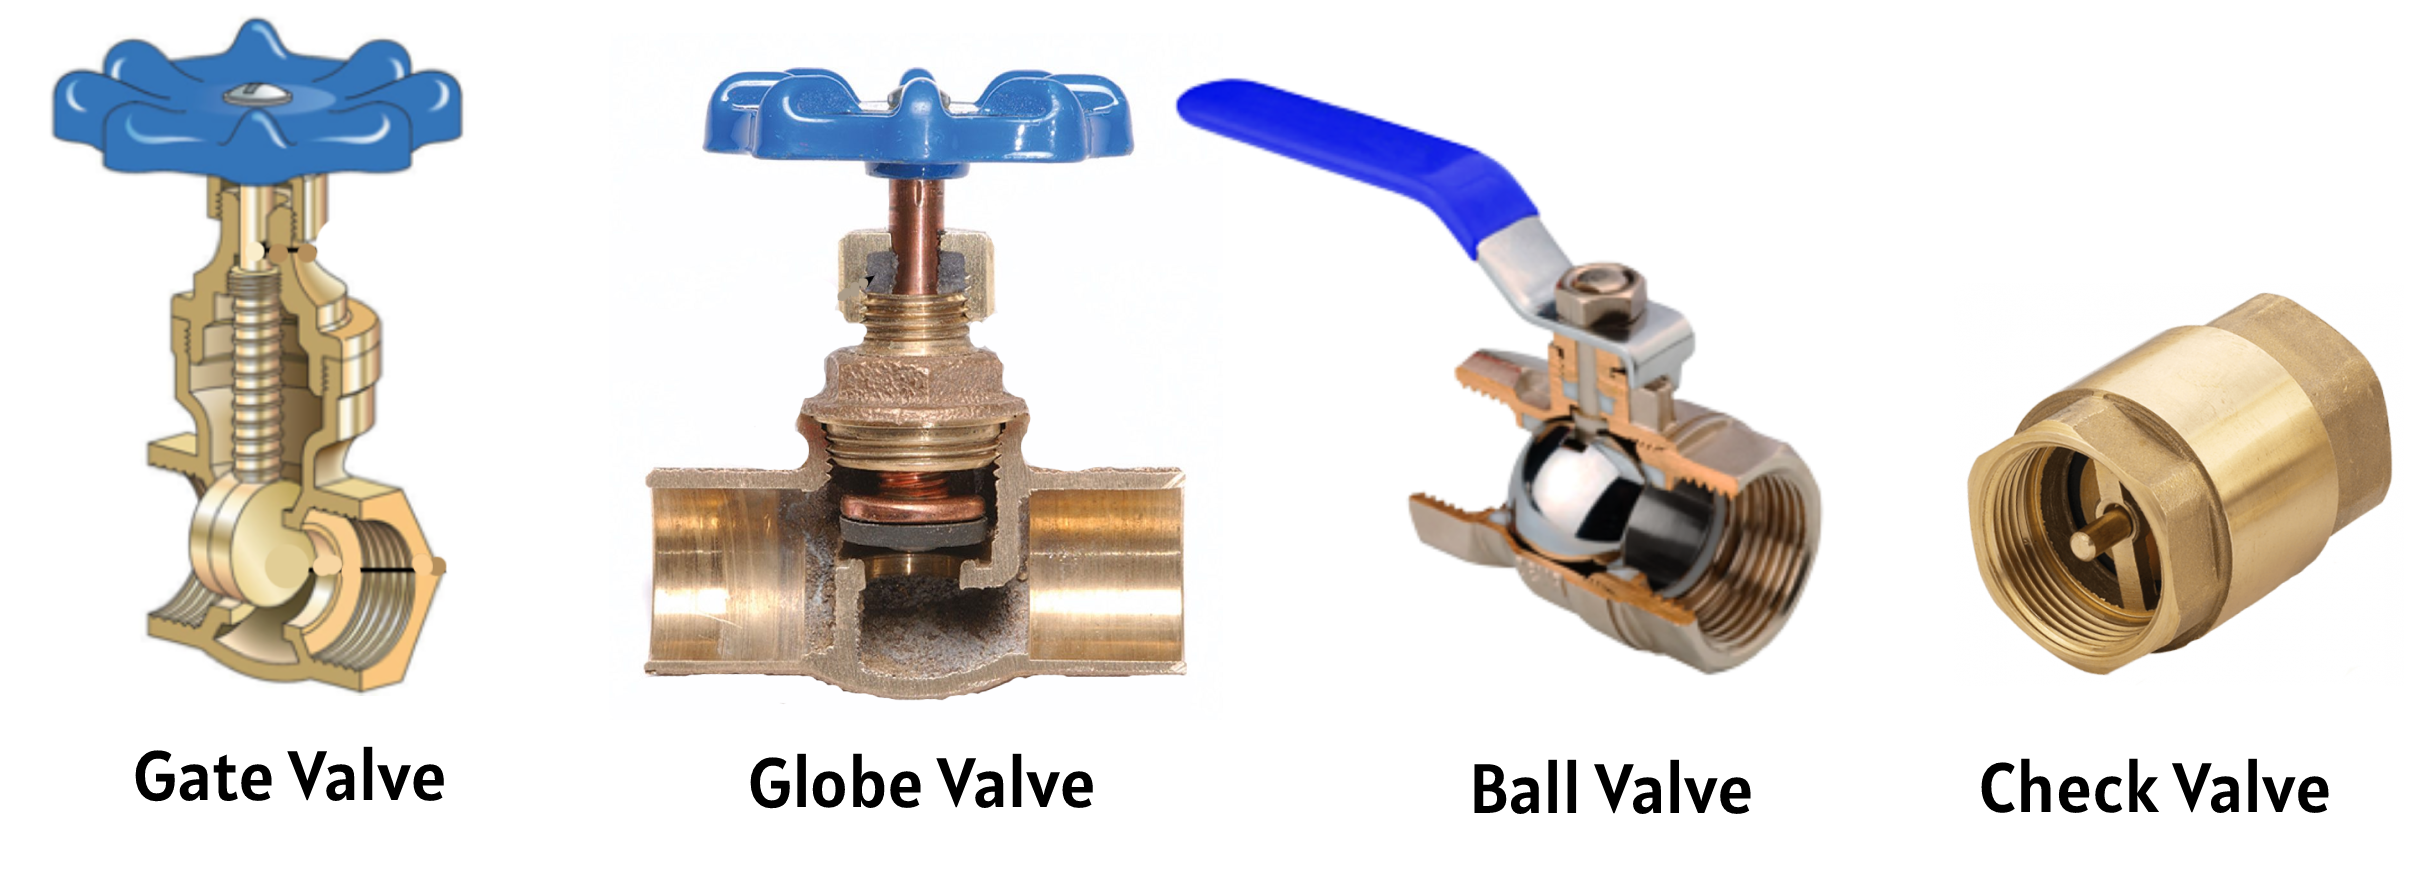 water valve cut-away diagram